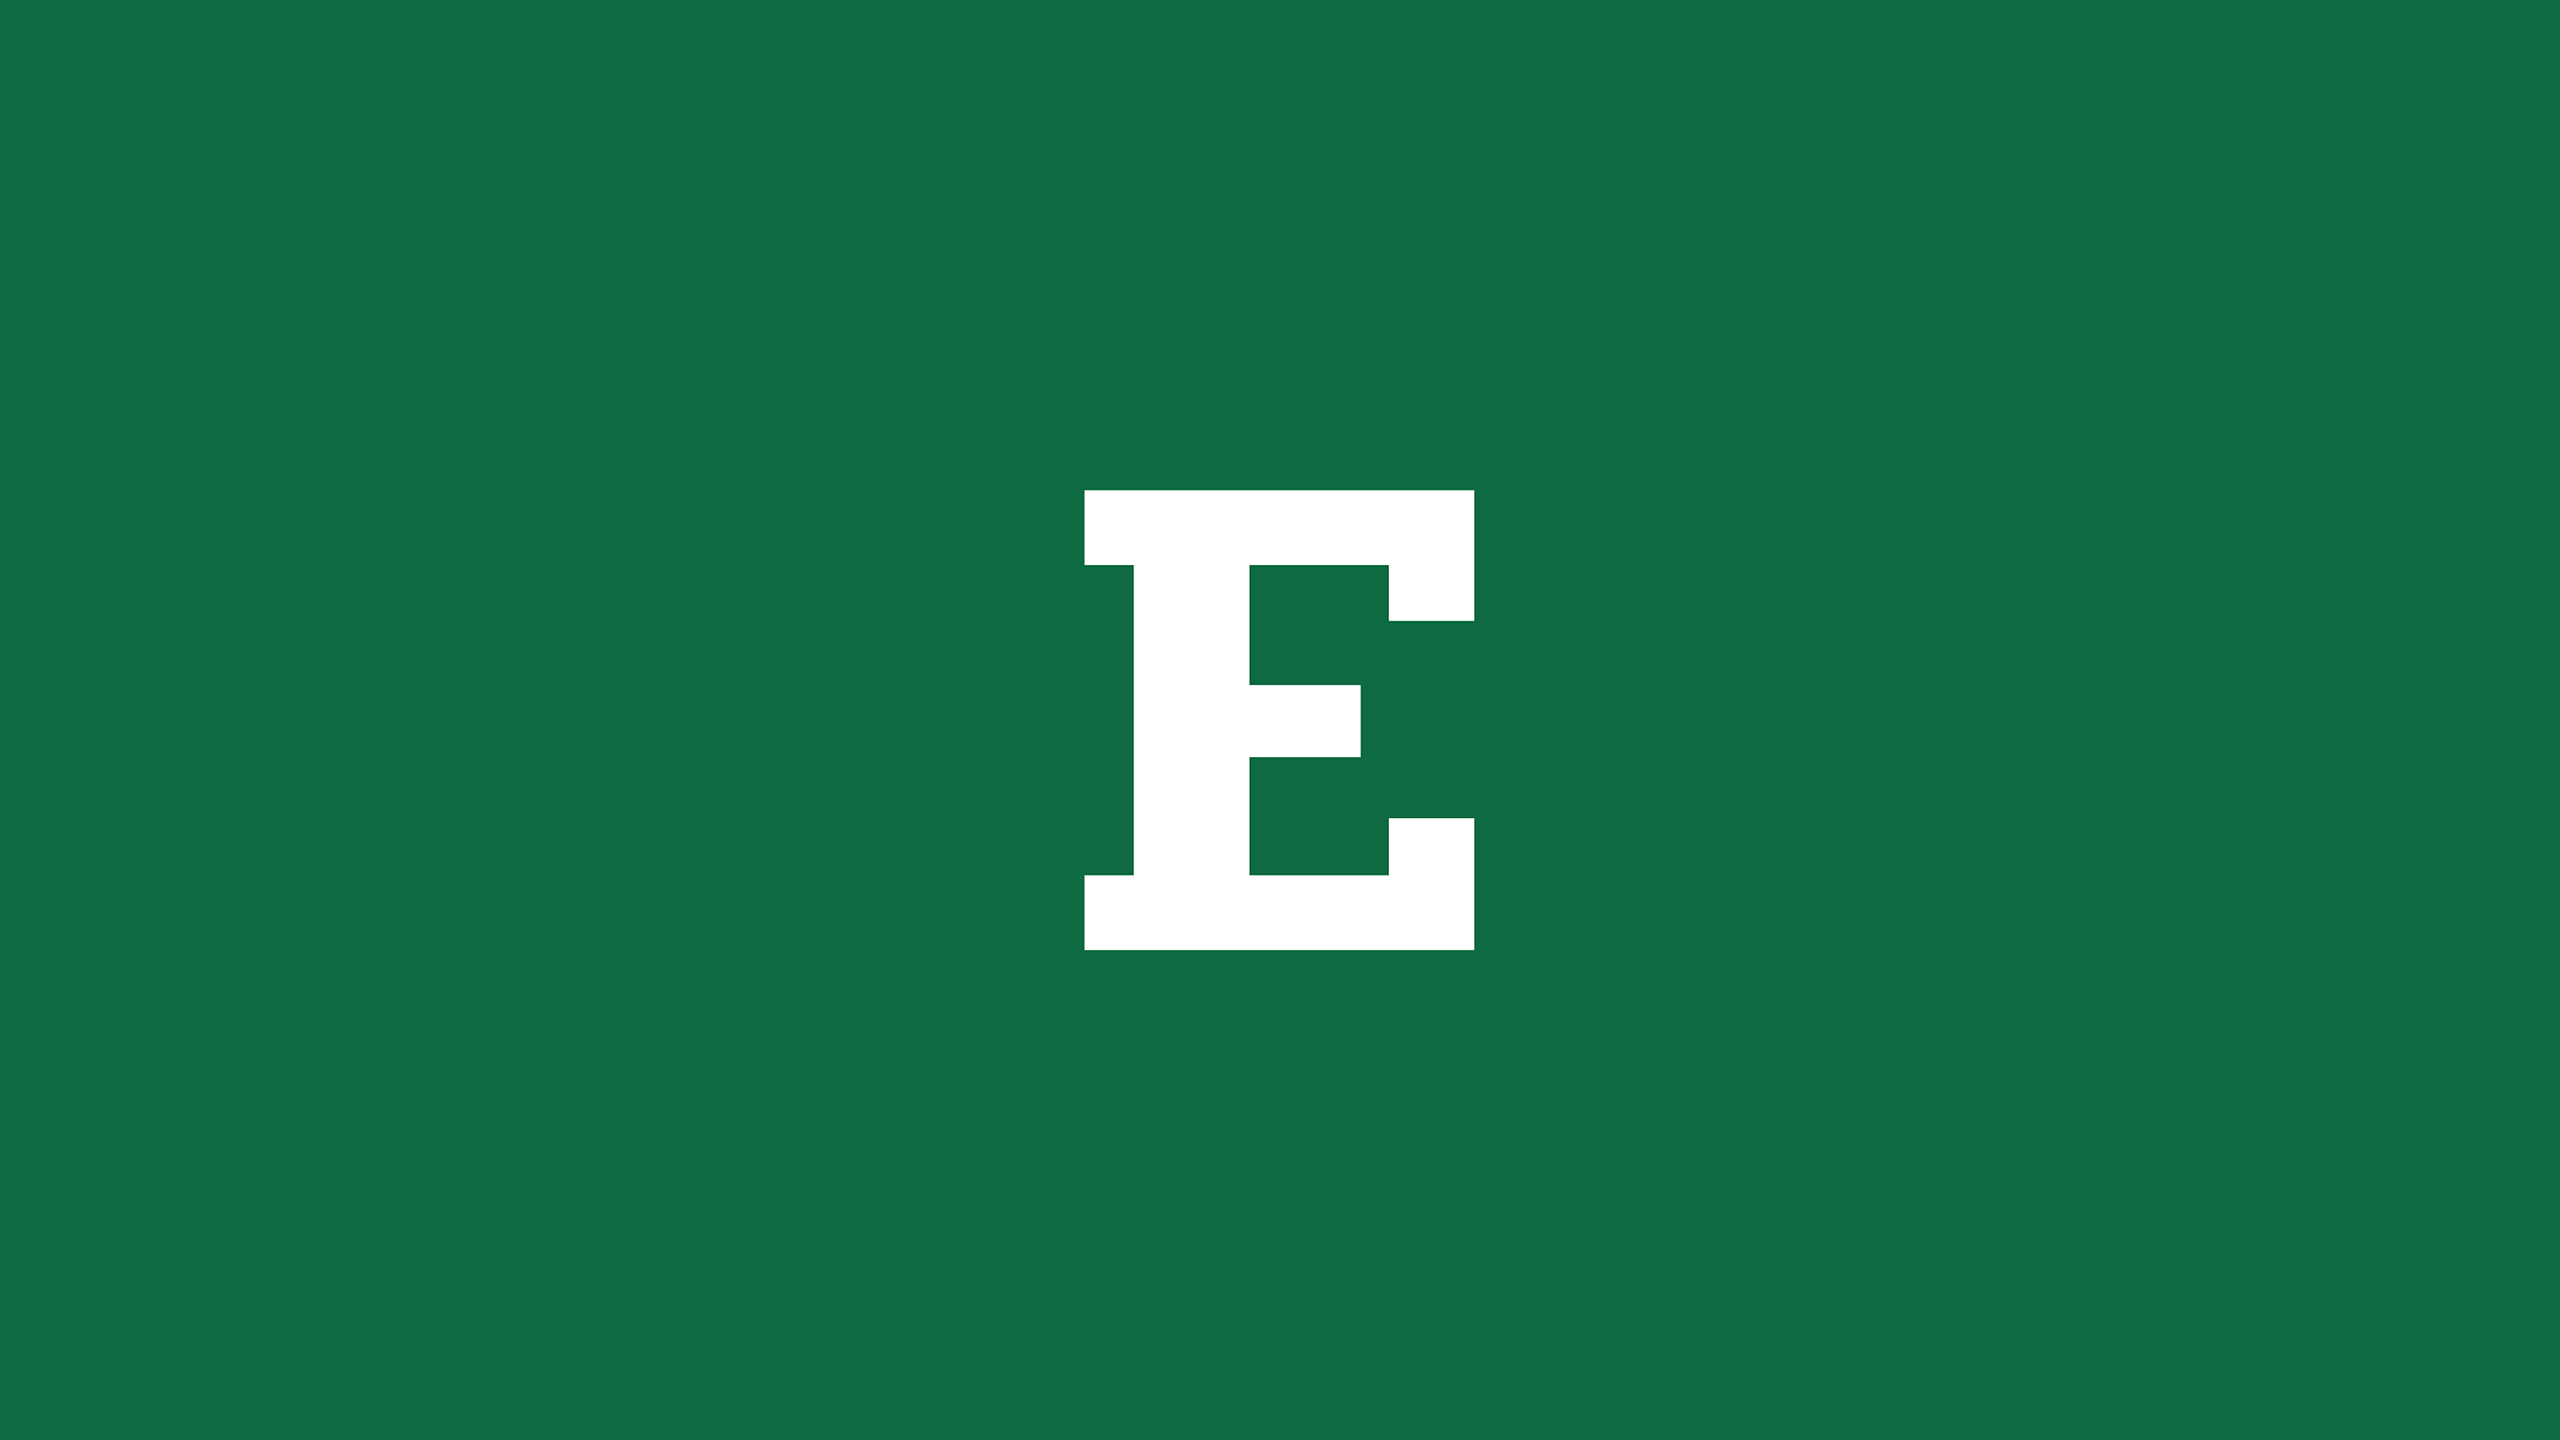 Eastern Michigan Eagles Basketball - NCAAB - Square Bettor